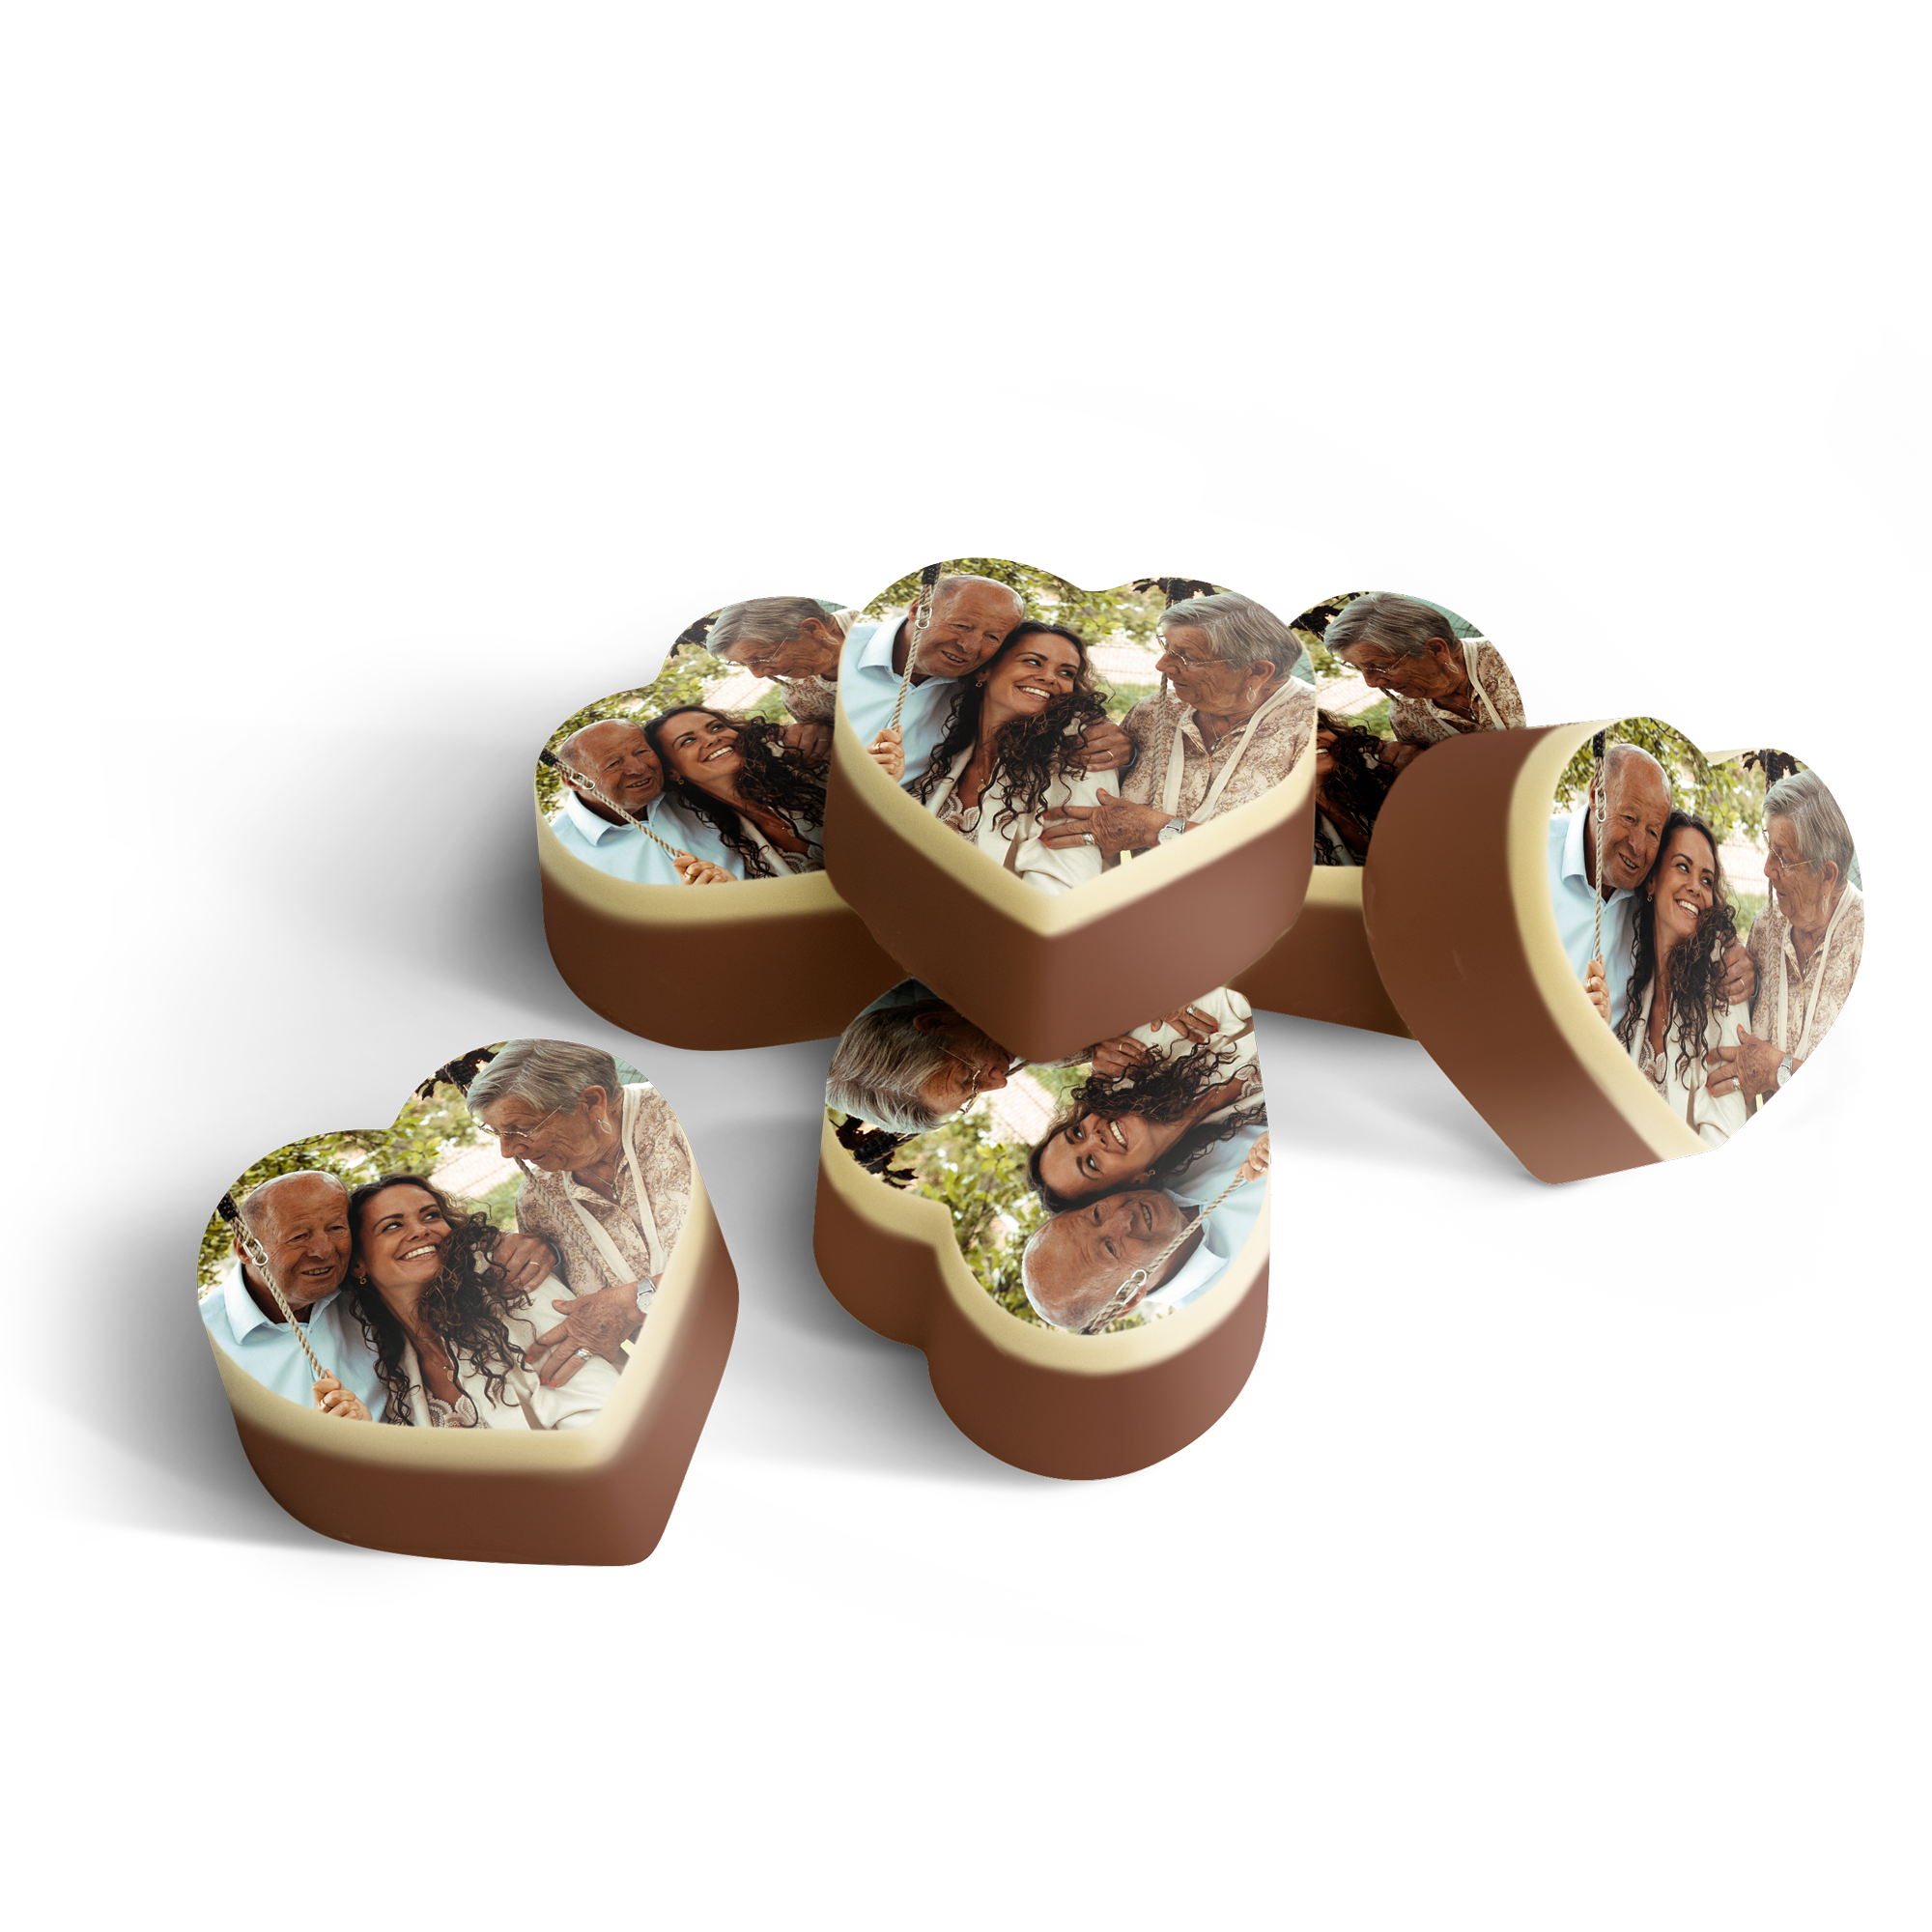 Personalised Photo Chocolates - Hearts